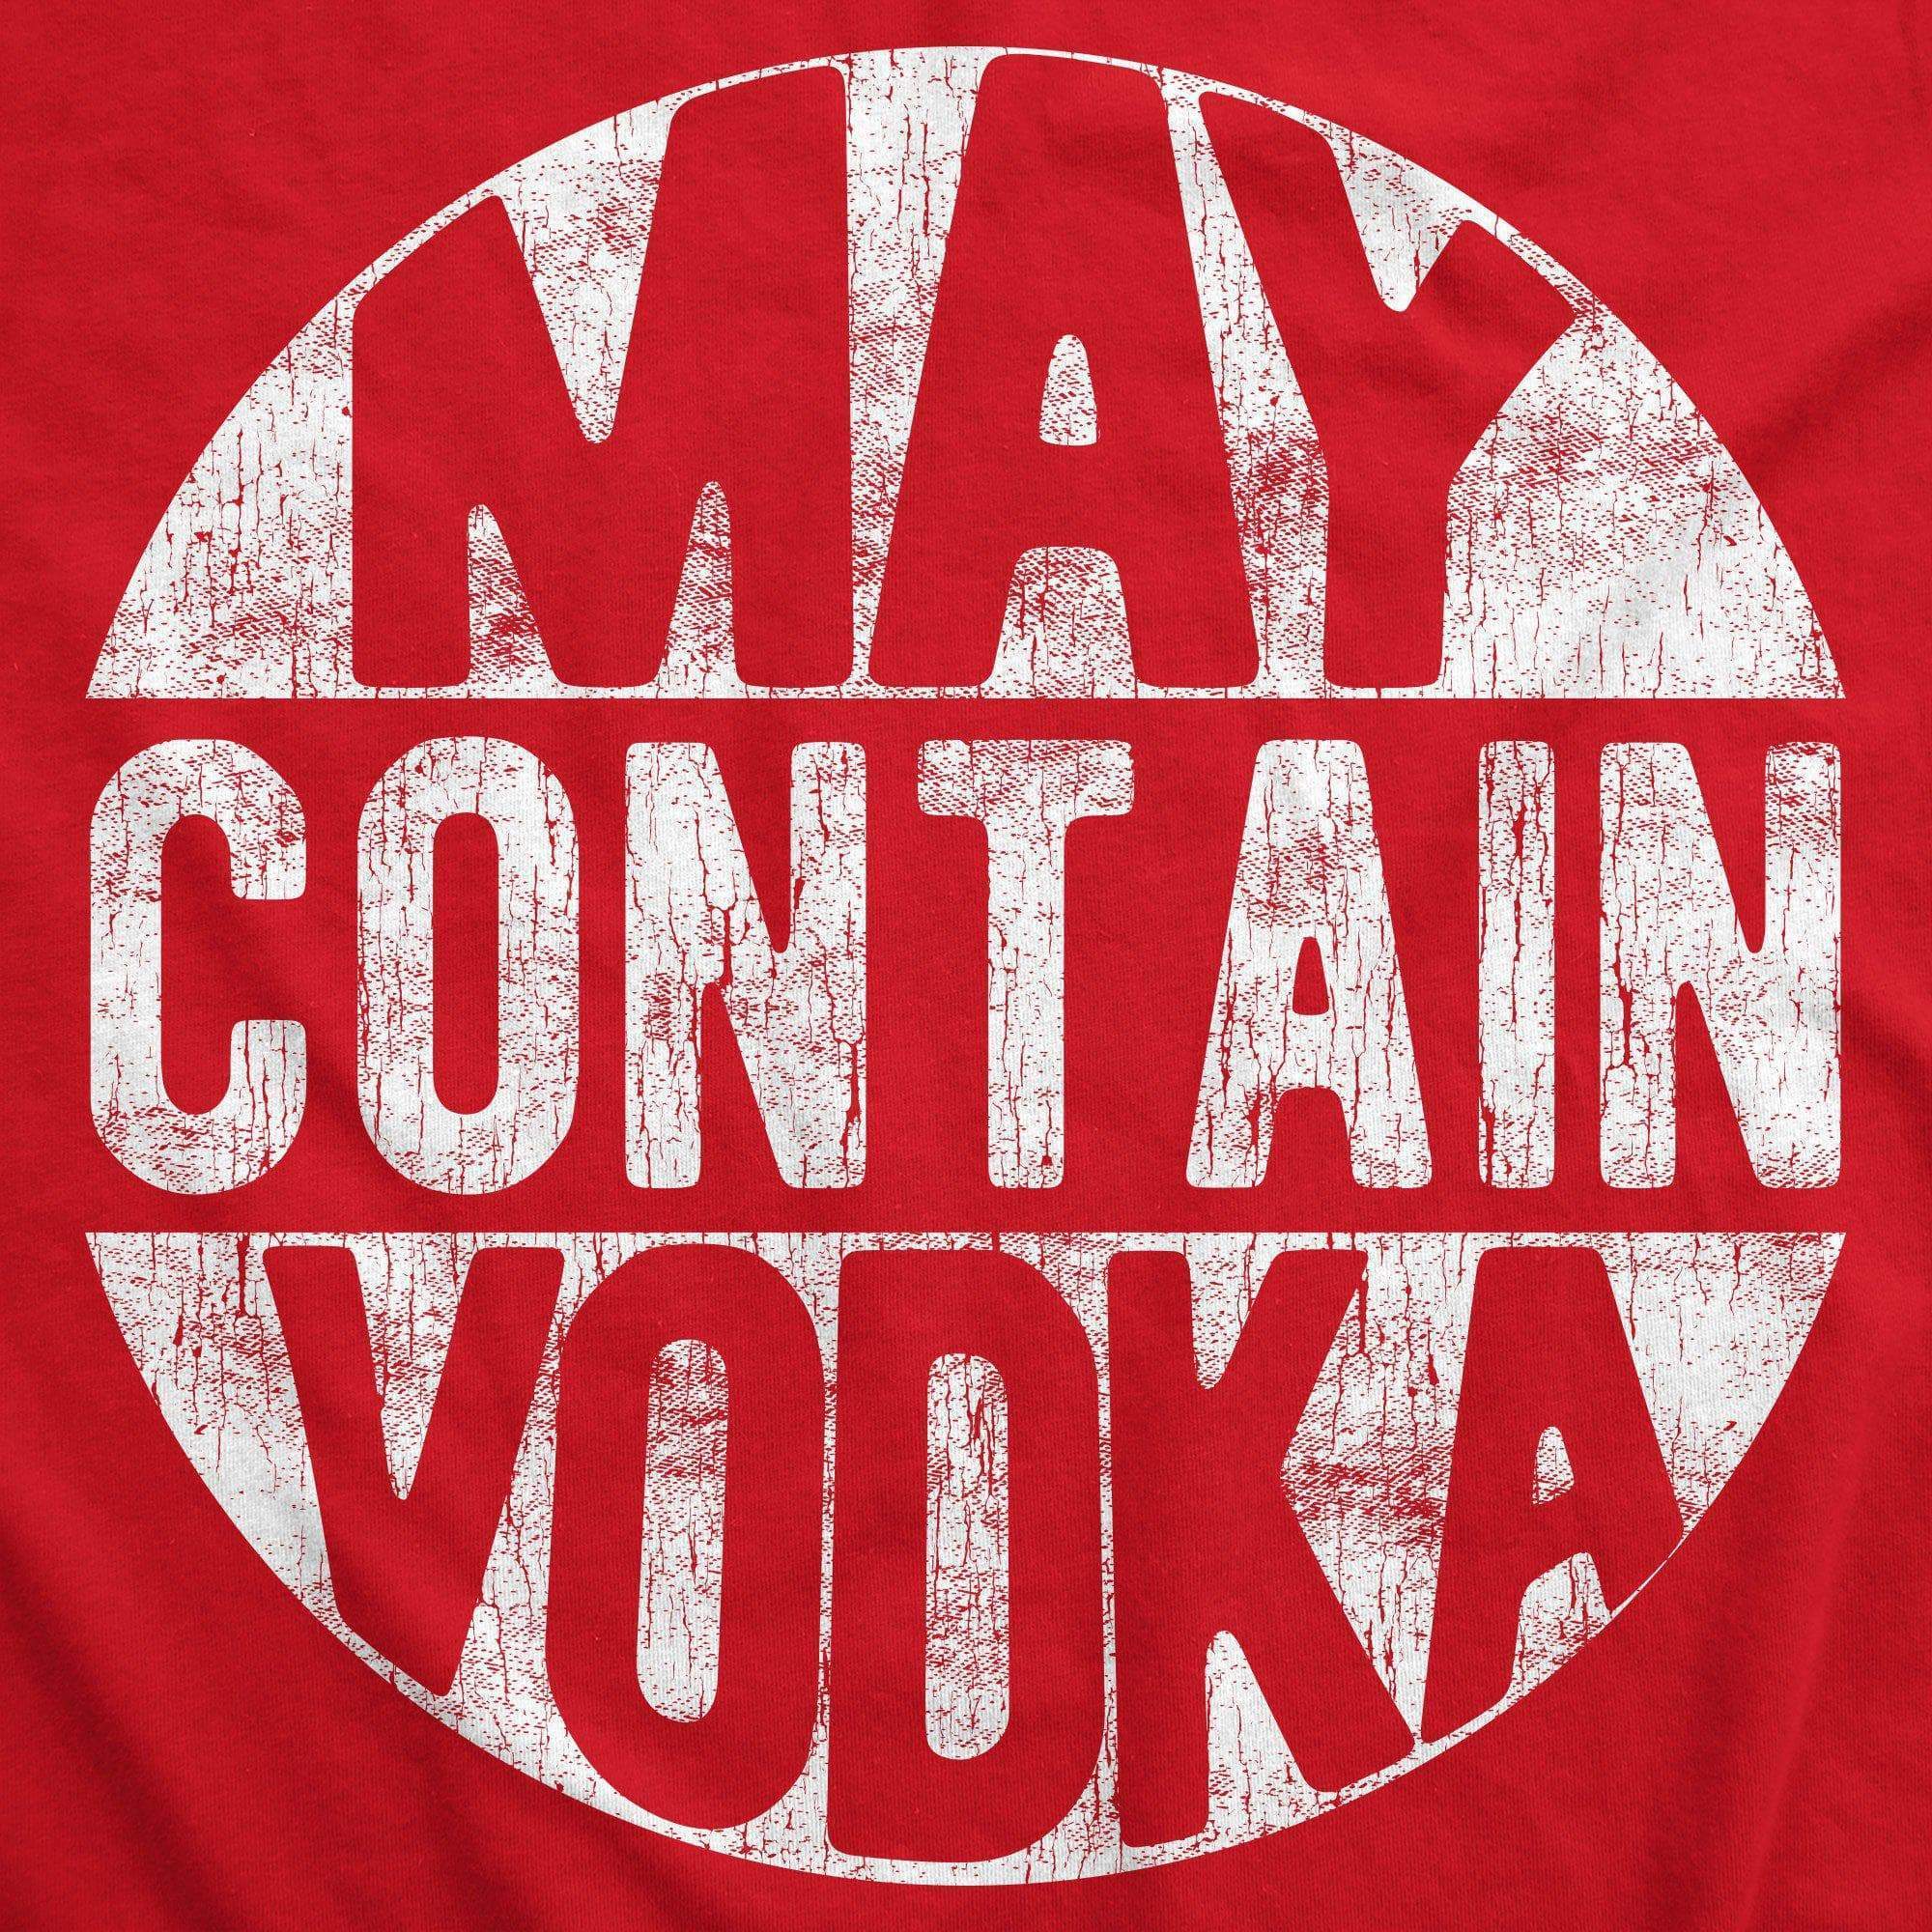 May Contain Vodka Men's Tank Top - Crazy Dog T-Shirts